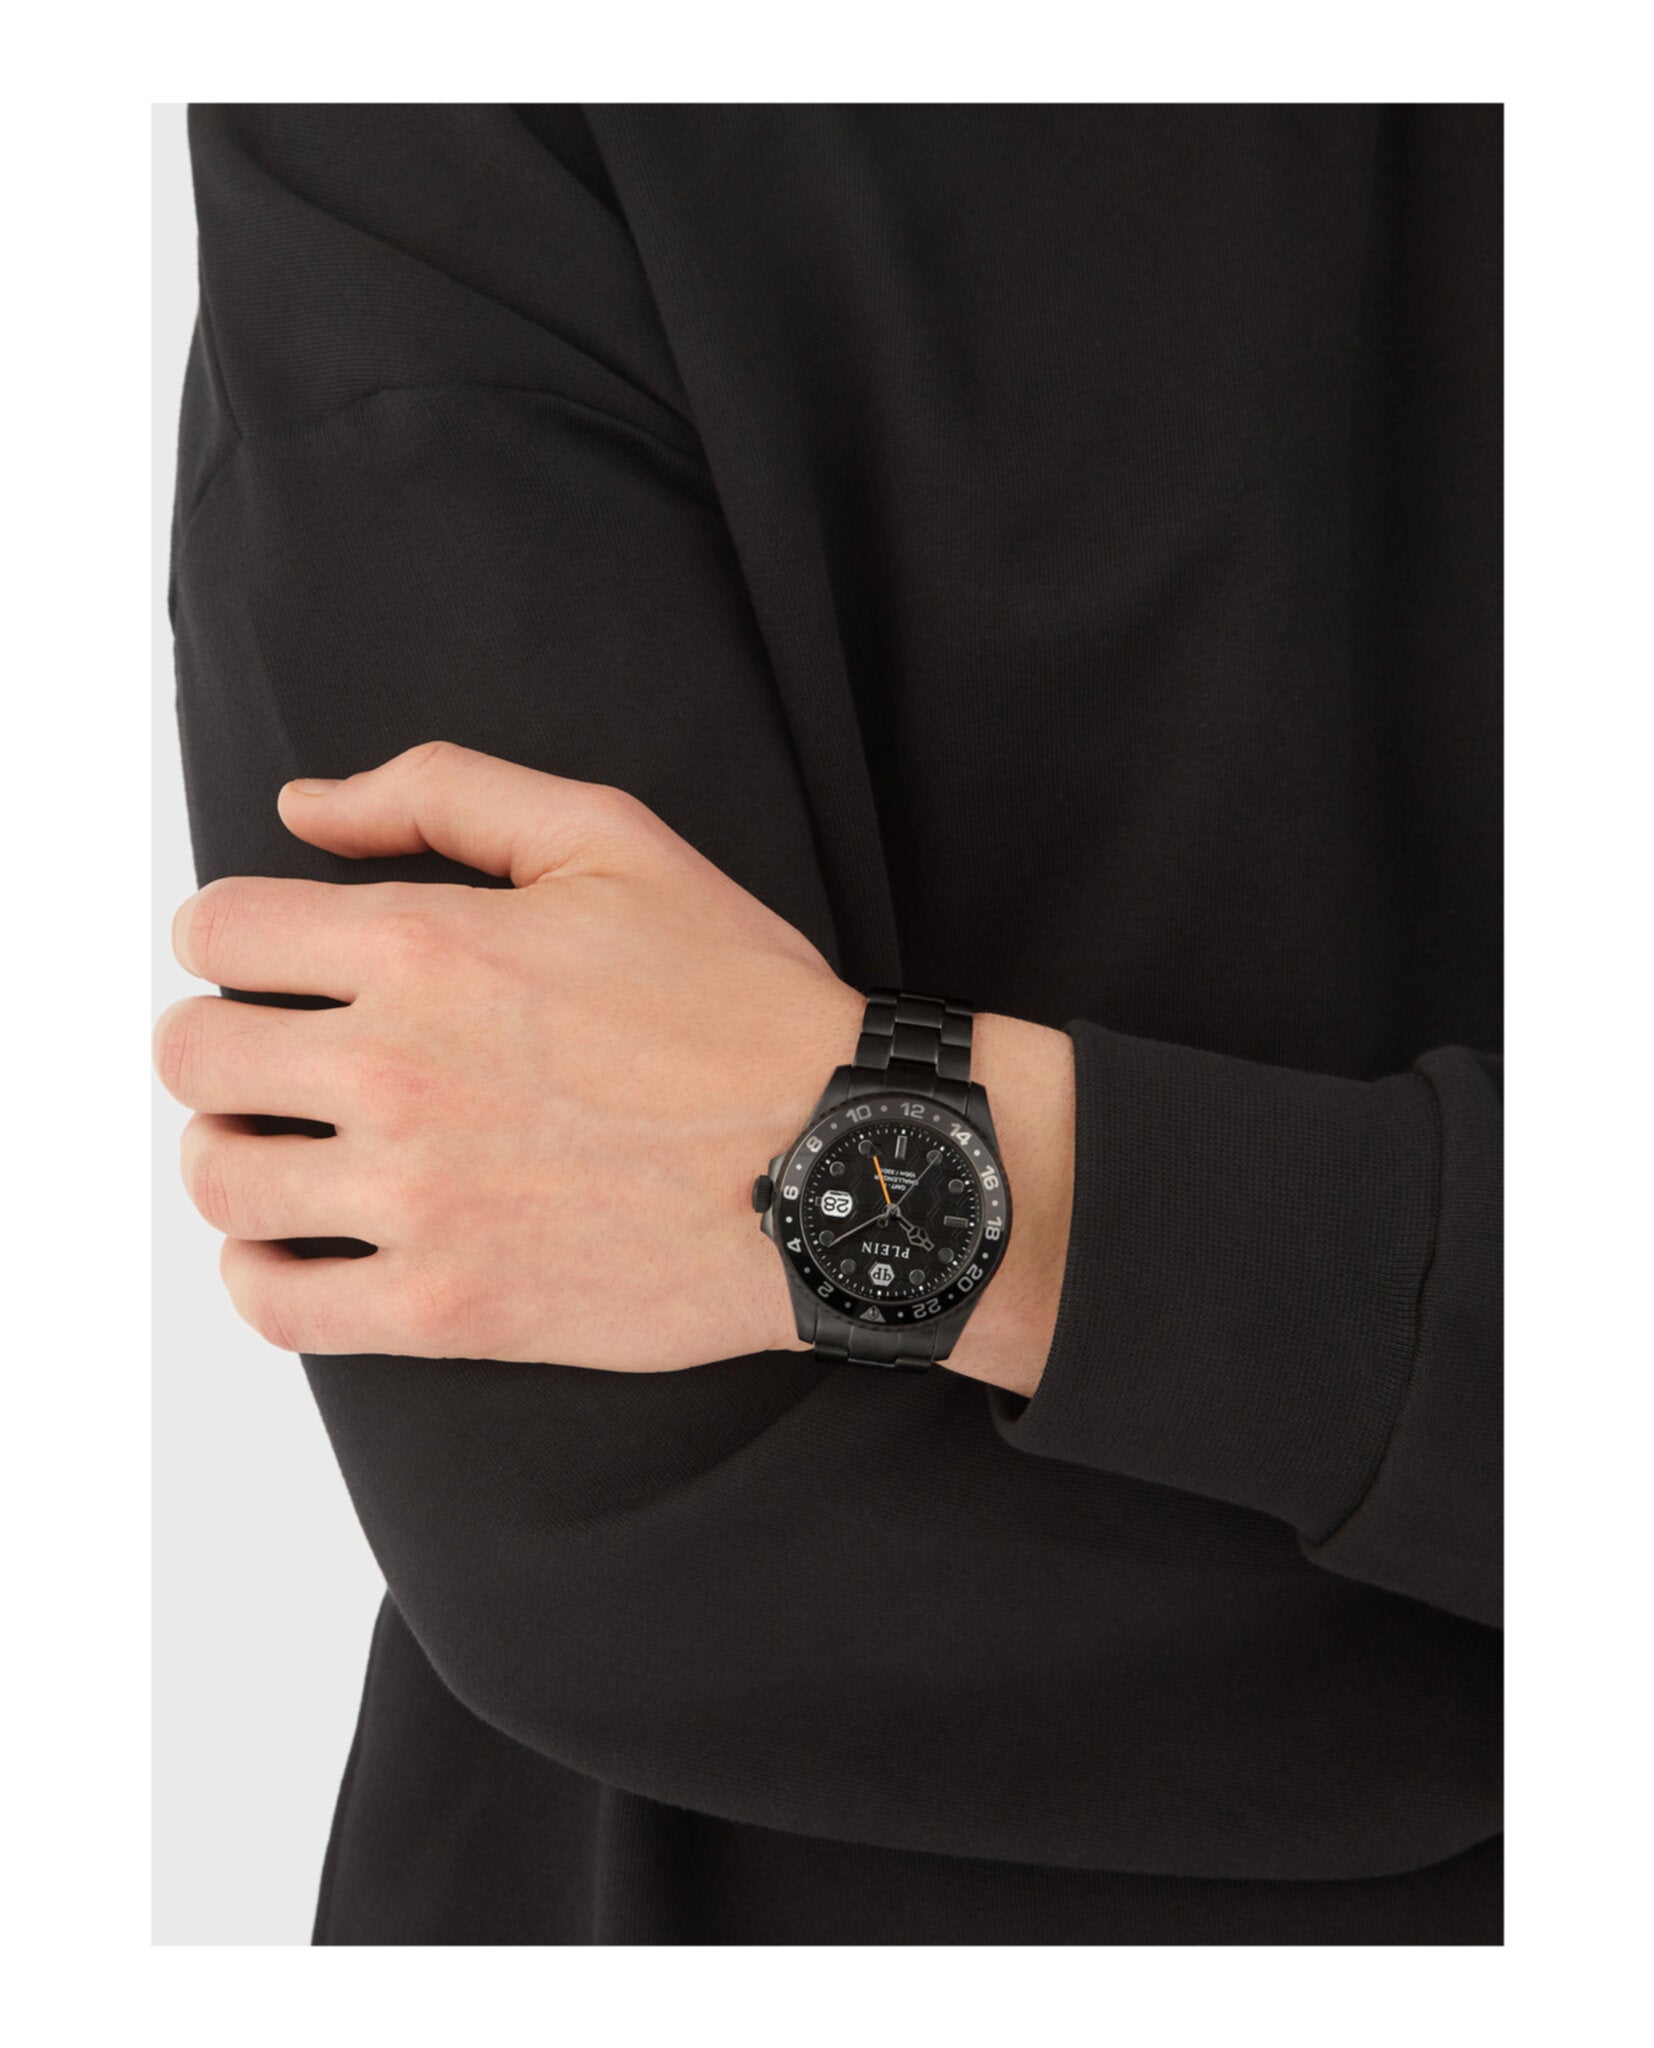 GMT-I Challenger Bracelet Watch